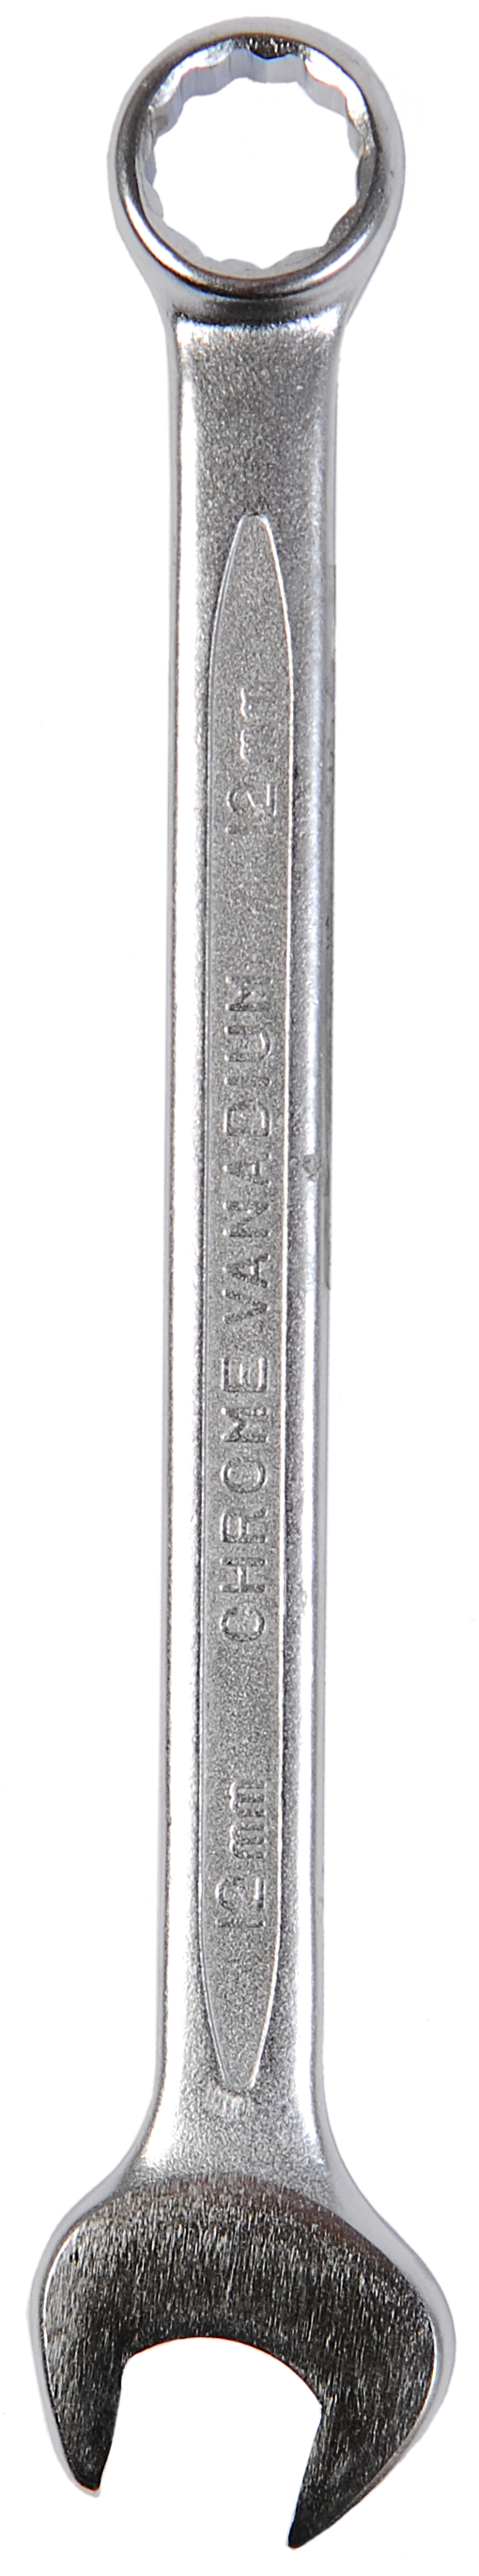 Stanley Slimline Combination Wrench 12mm